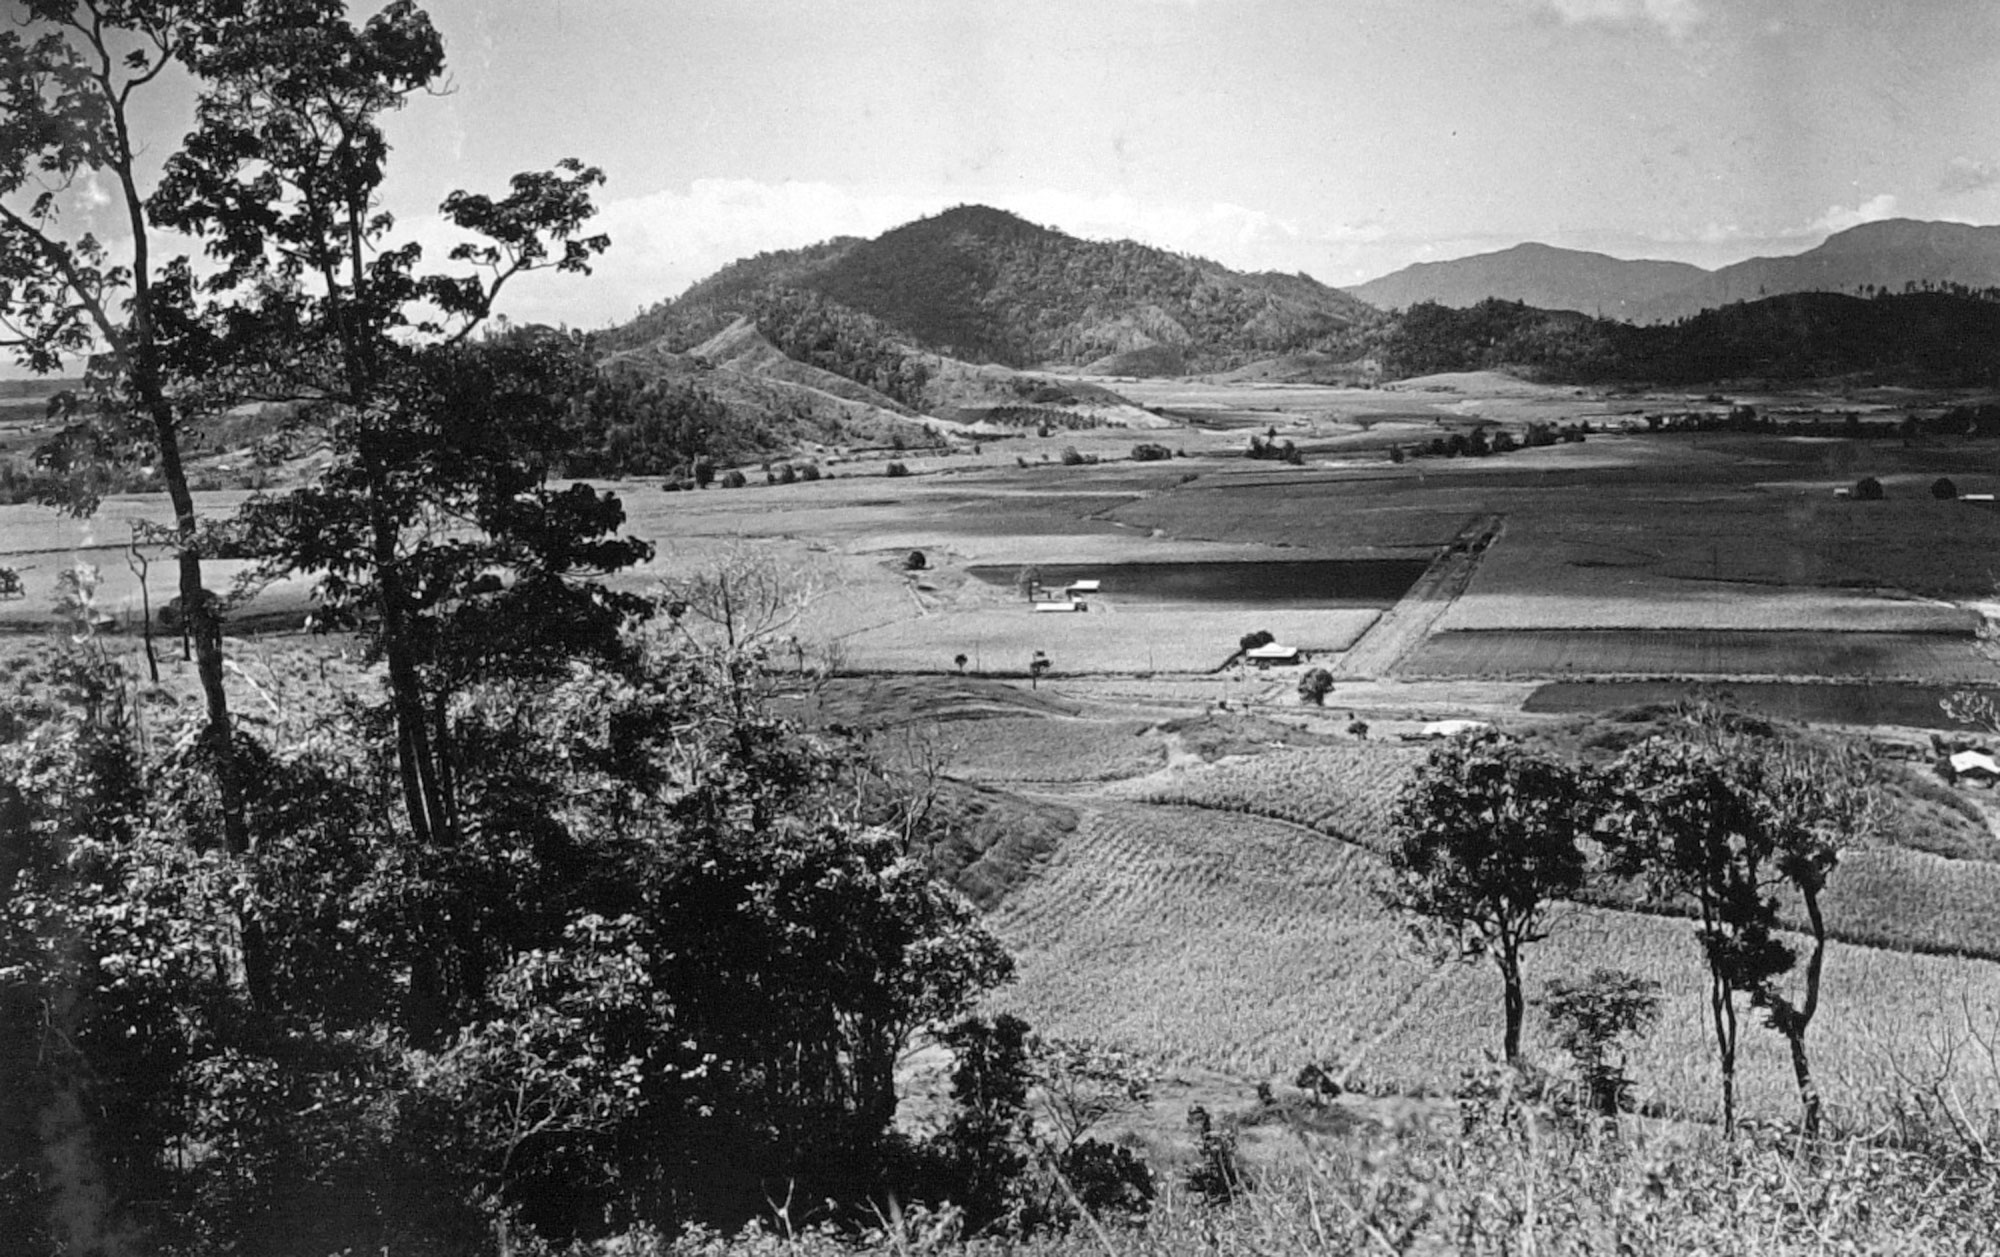 Cane fields at Jungara, south of Cairns, Queensland, 1935.